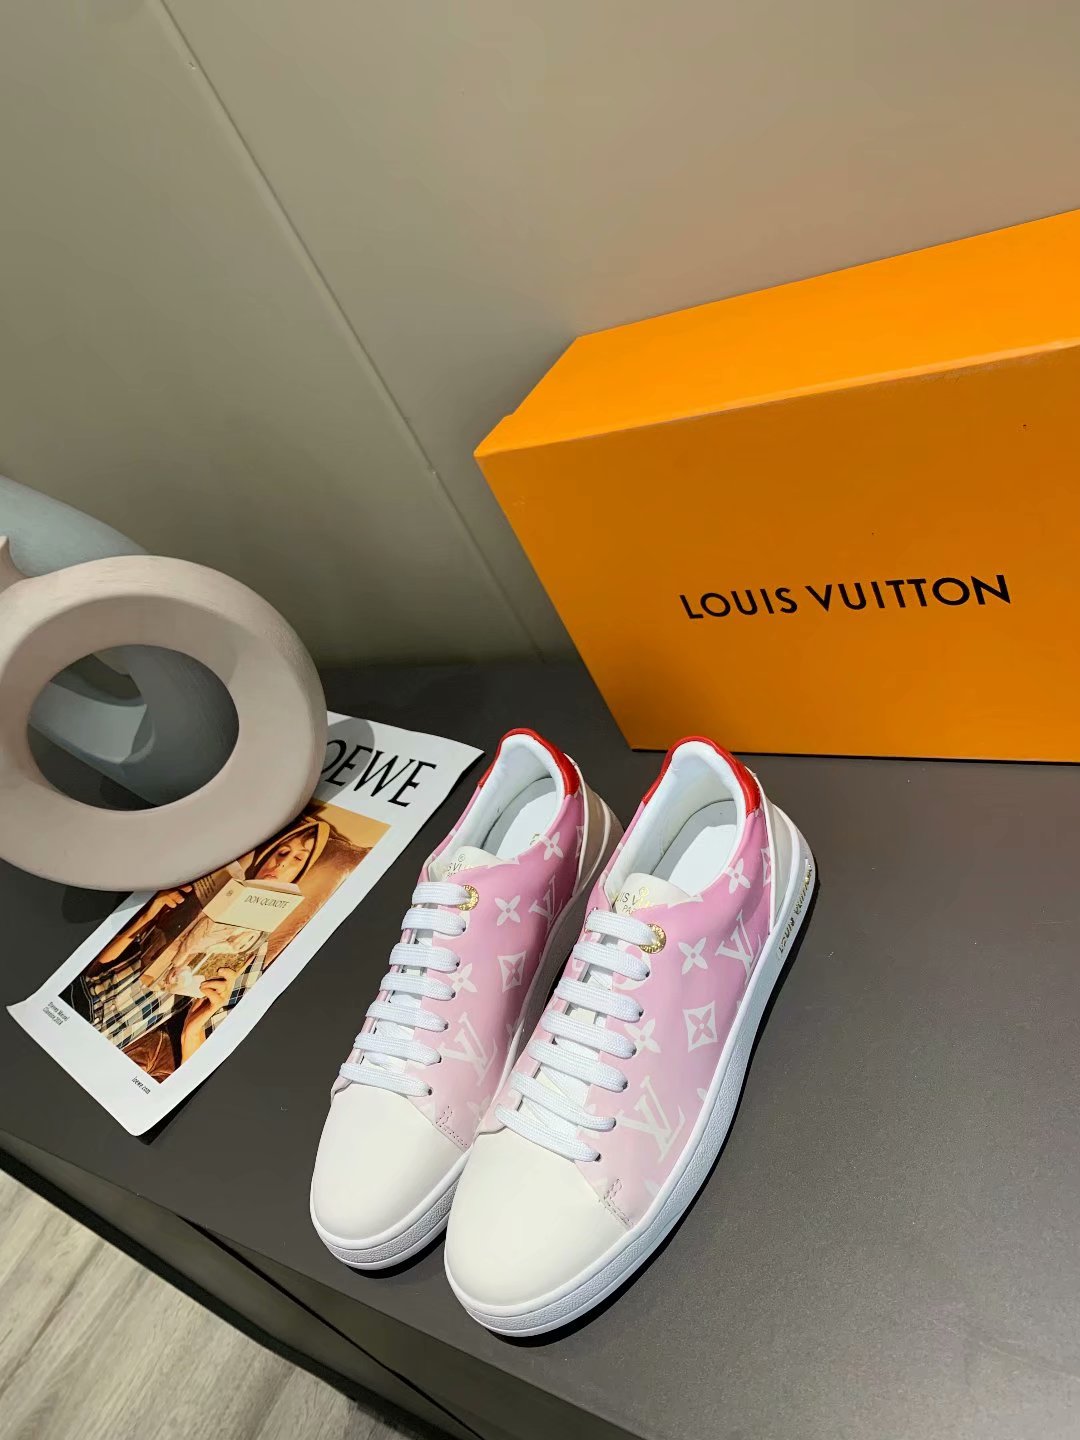 BL - LUV Time Out Orange White Sneaker